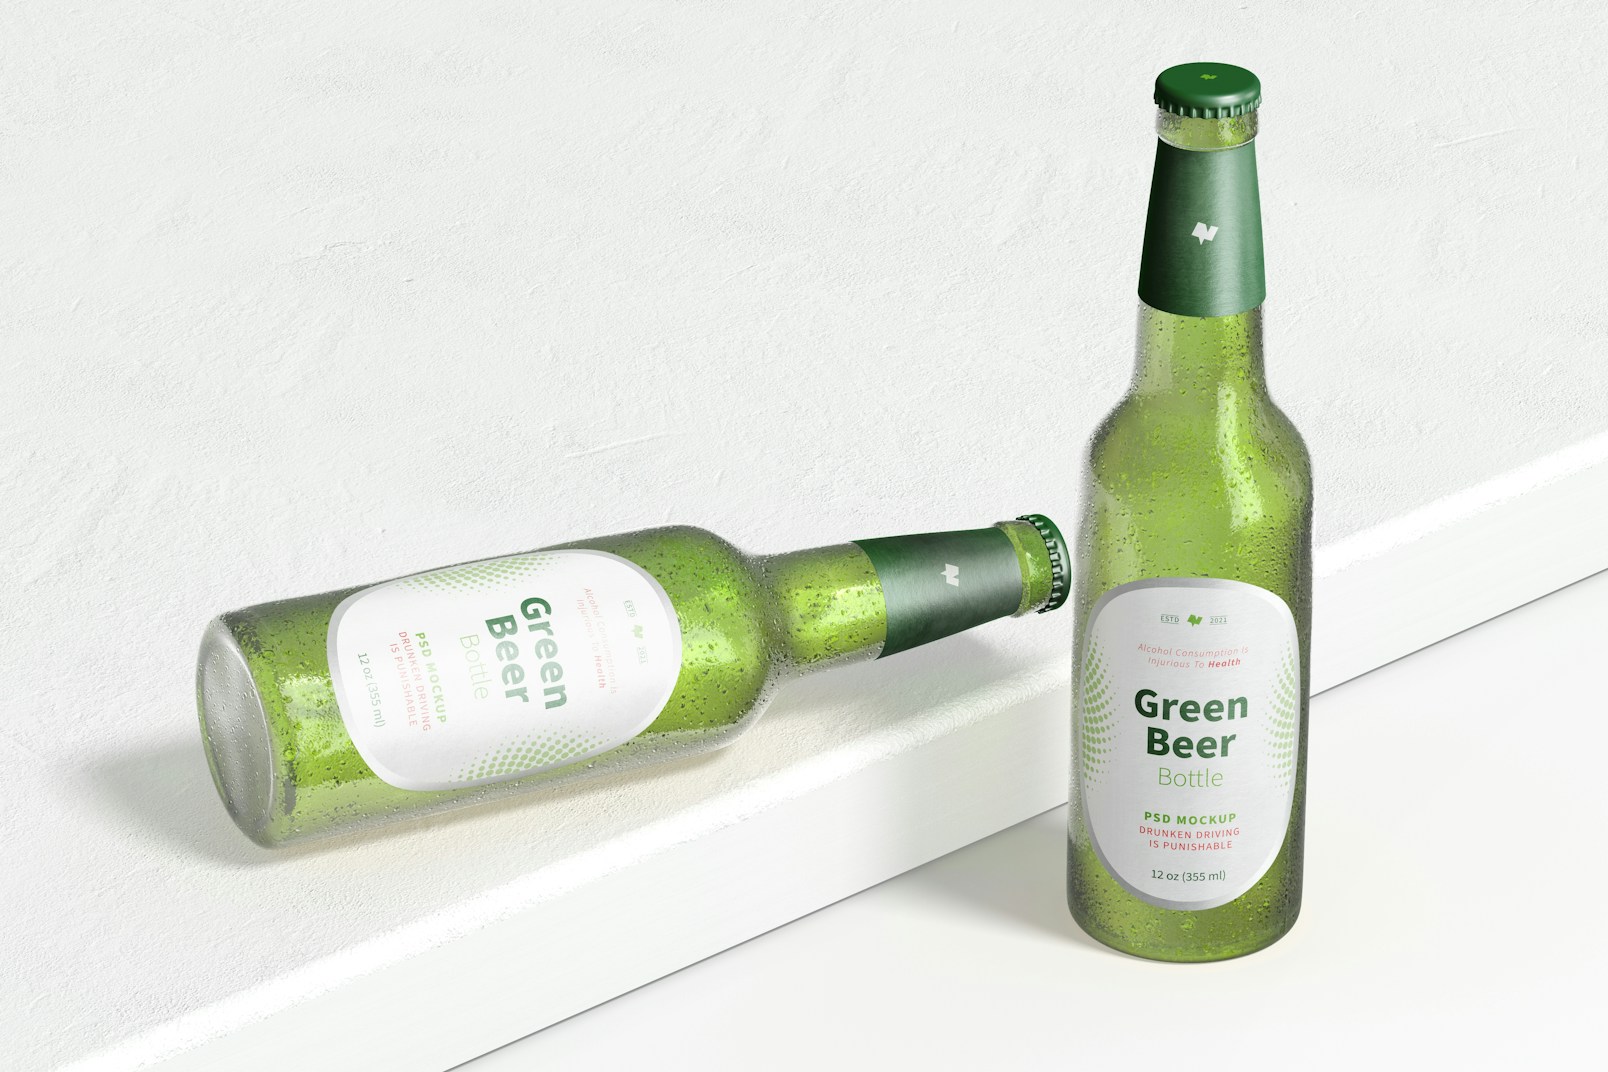 Green Beer Bottles Mockup, Perspective